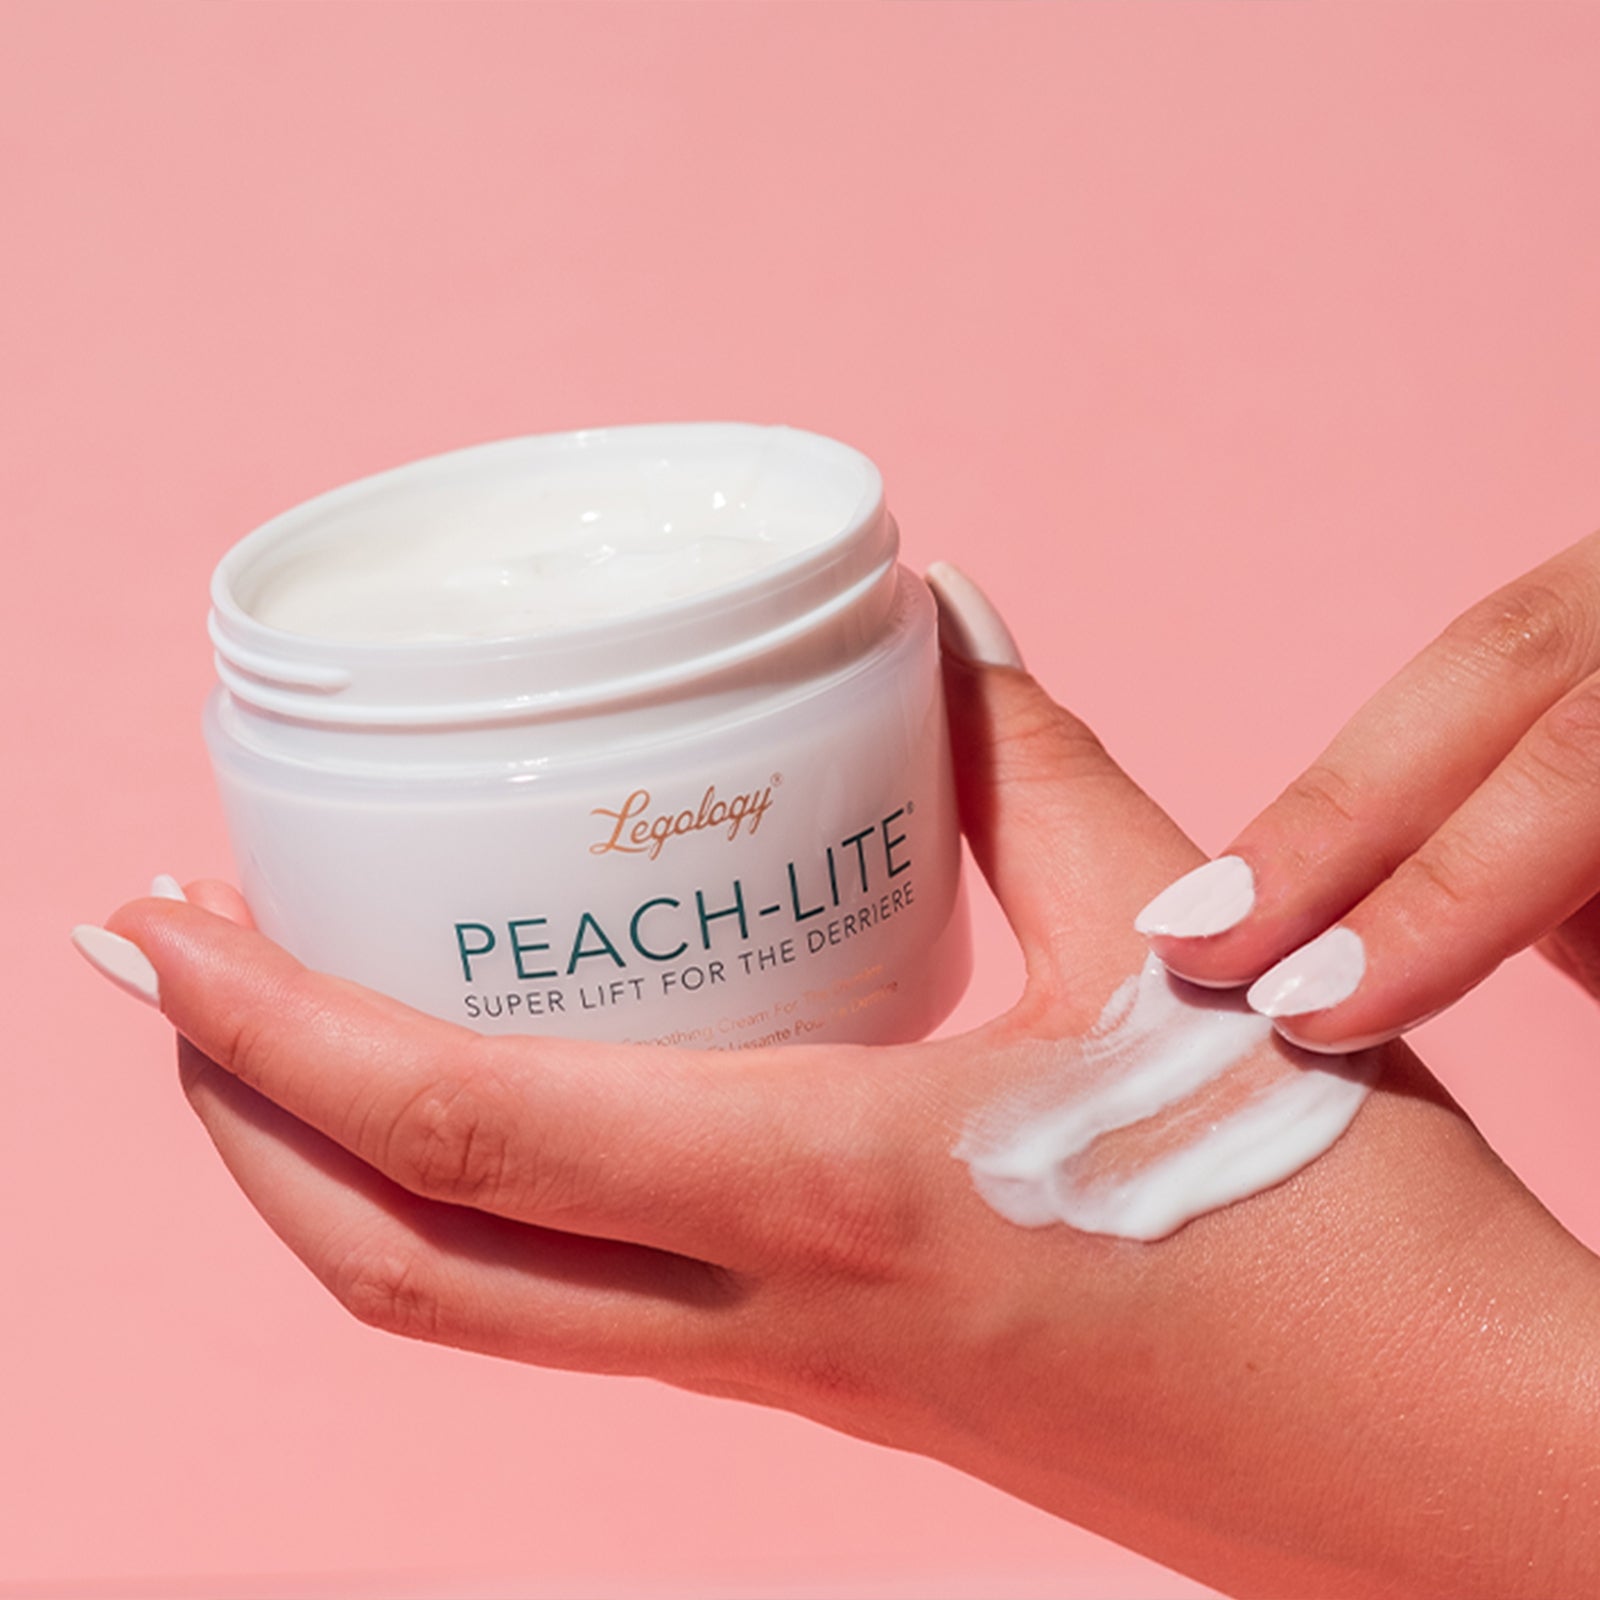 How to use Peach-Lite bum cream